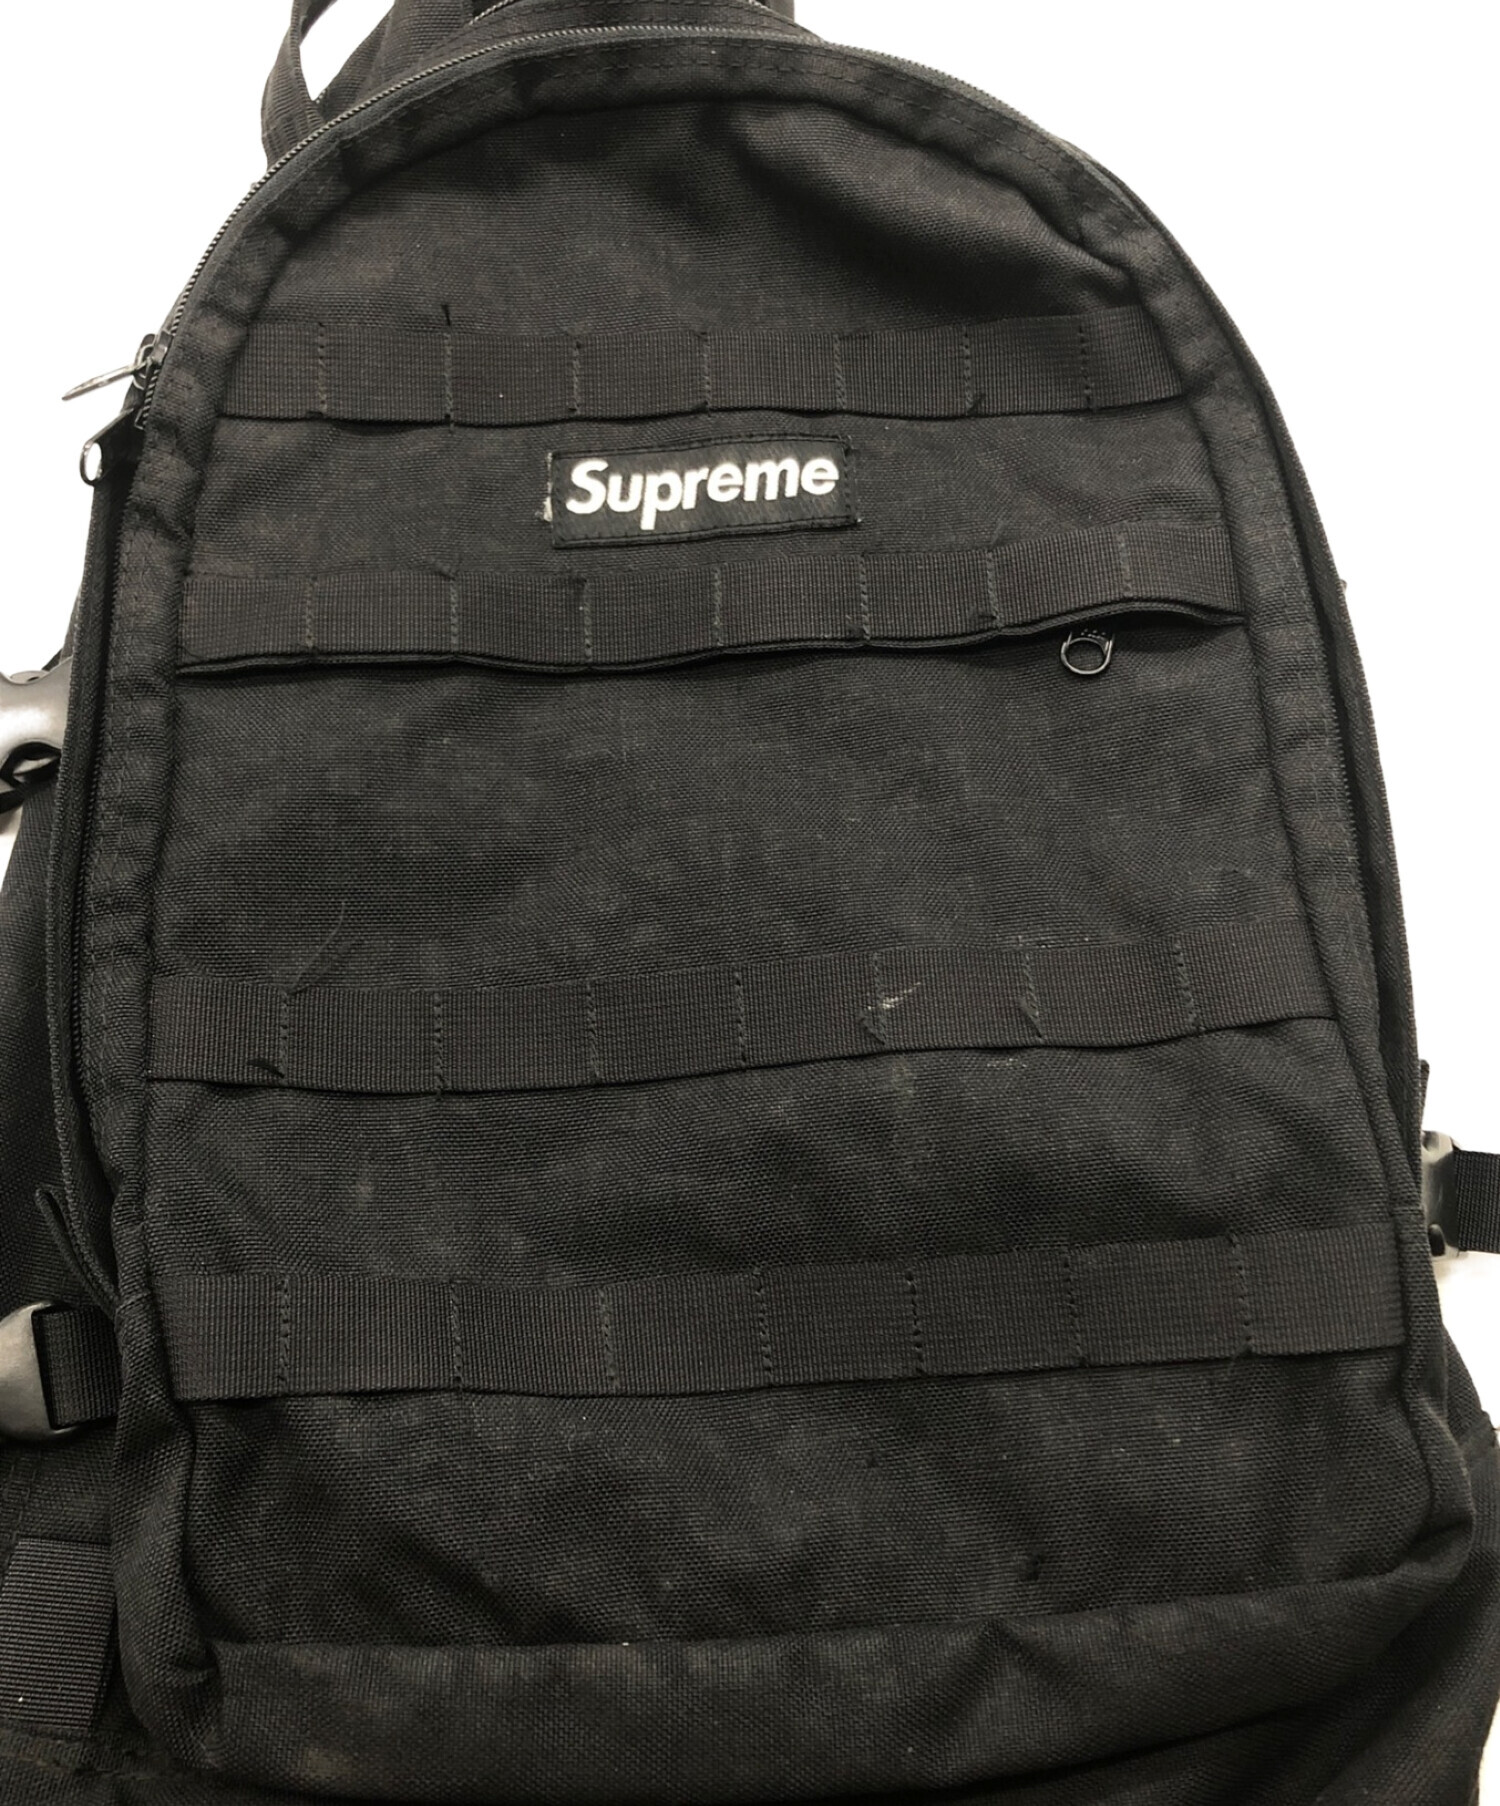 Supreme Backpack 2004 S/S レオパード - リュック/バックパック